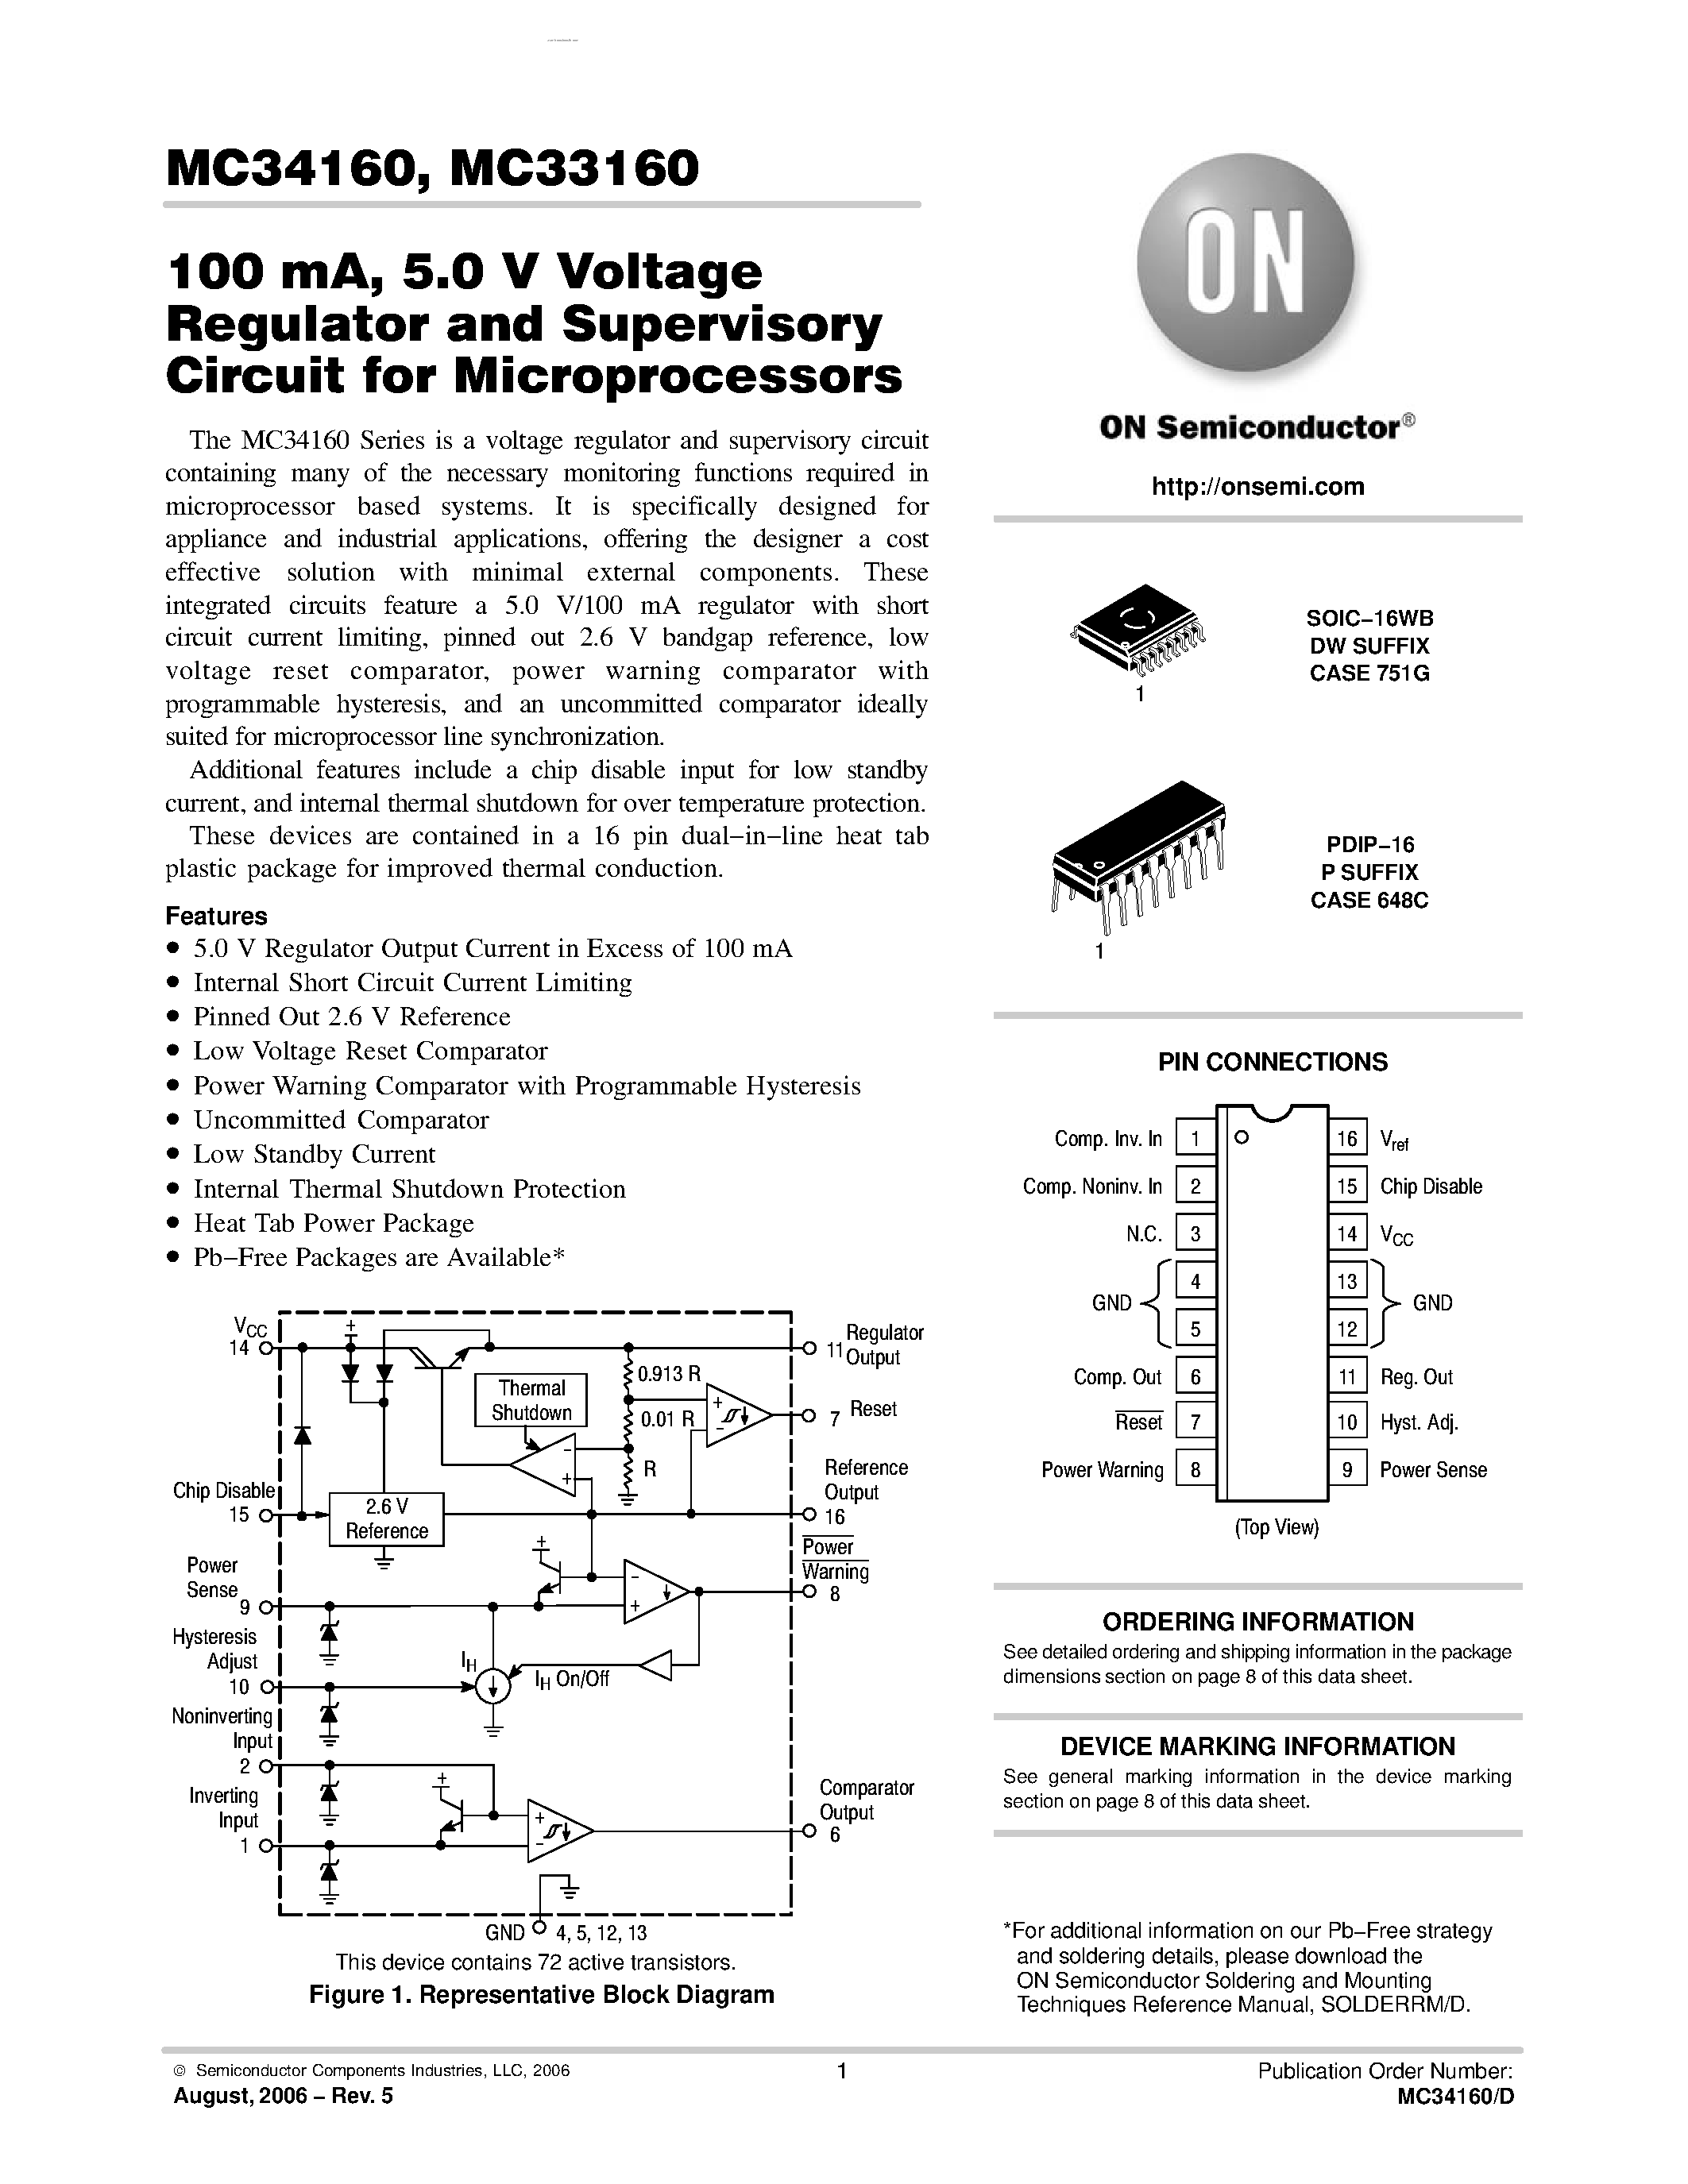 Datasheet MC33160 - (MC33160 / MC34160) Voltage Regulator and Supervisory Circuit page 1